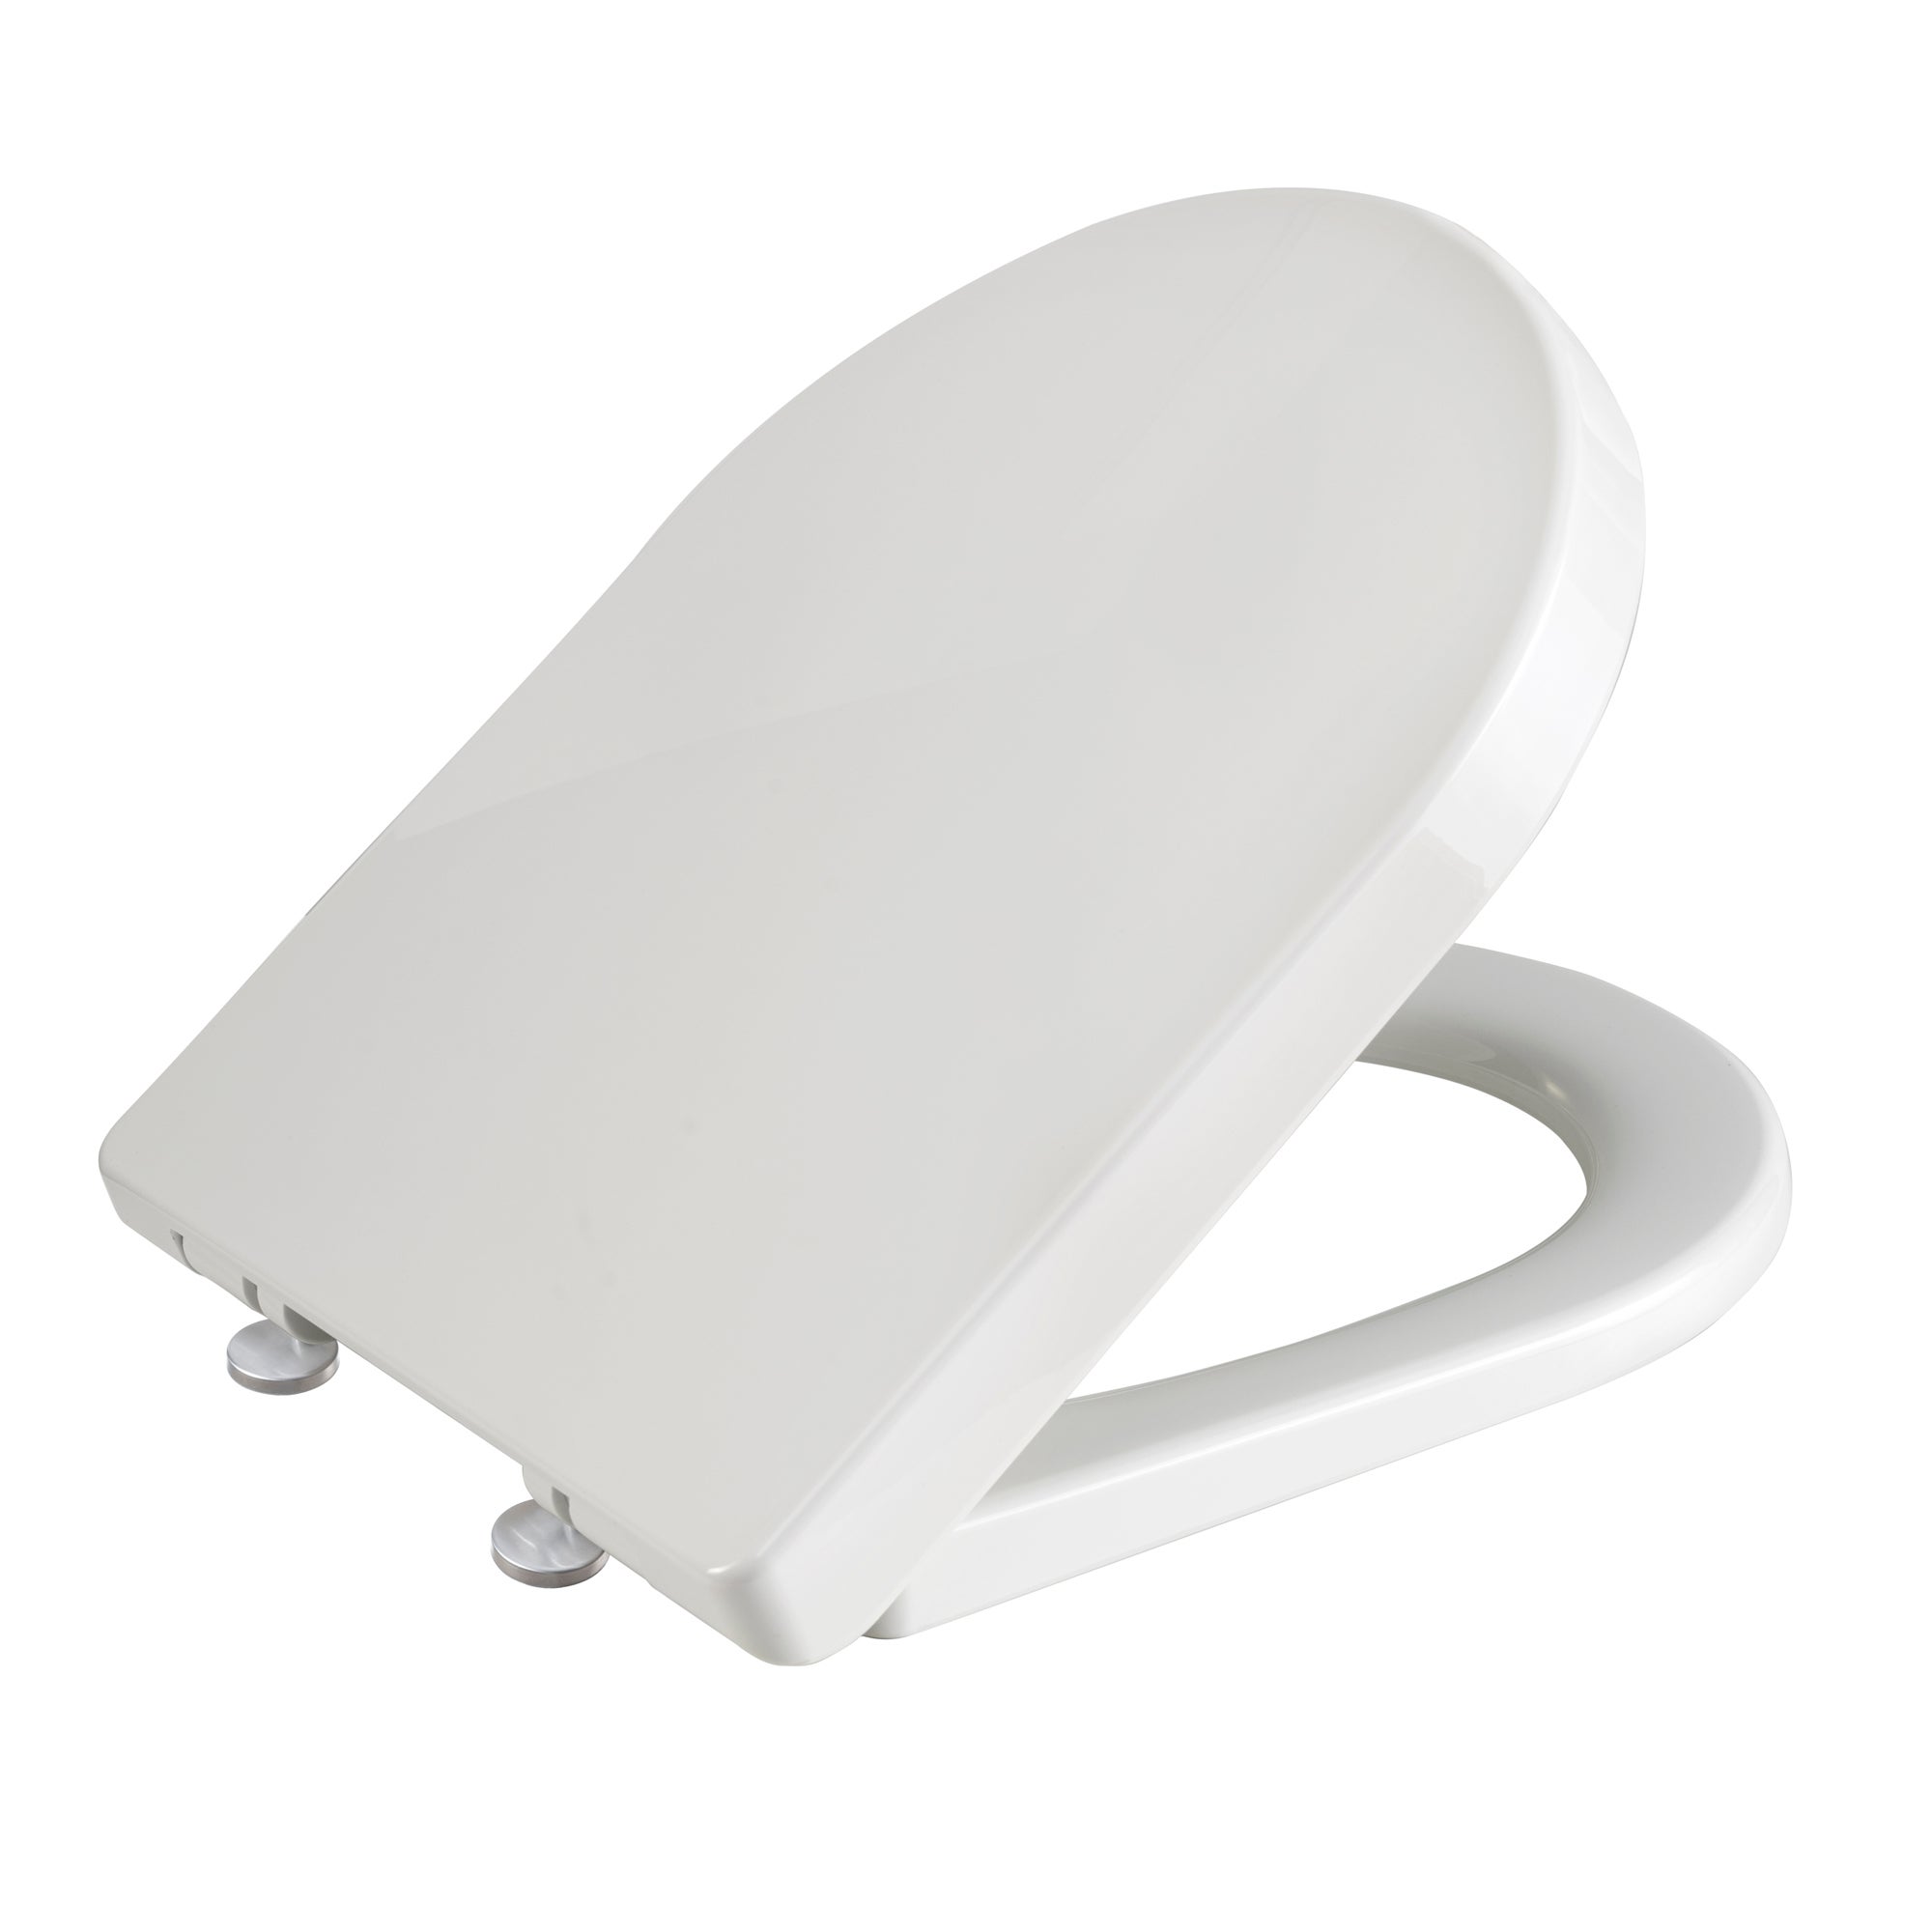 Thermoplast White D Shape Toilet Seat | Dunelm